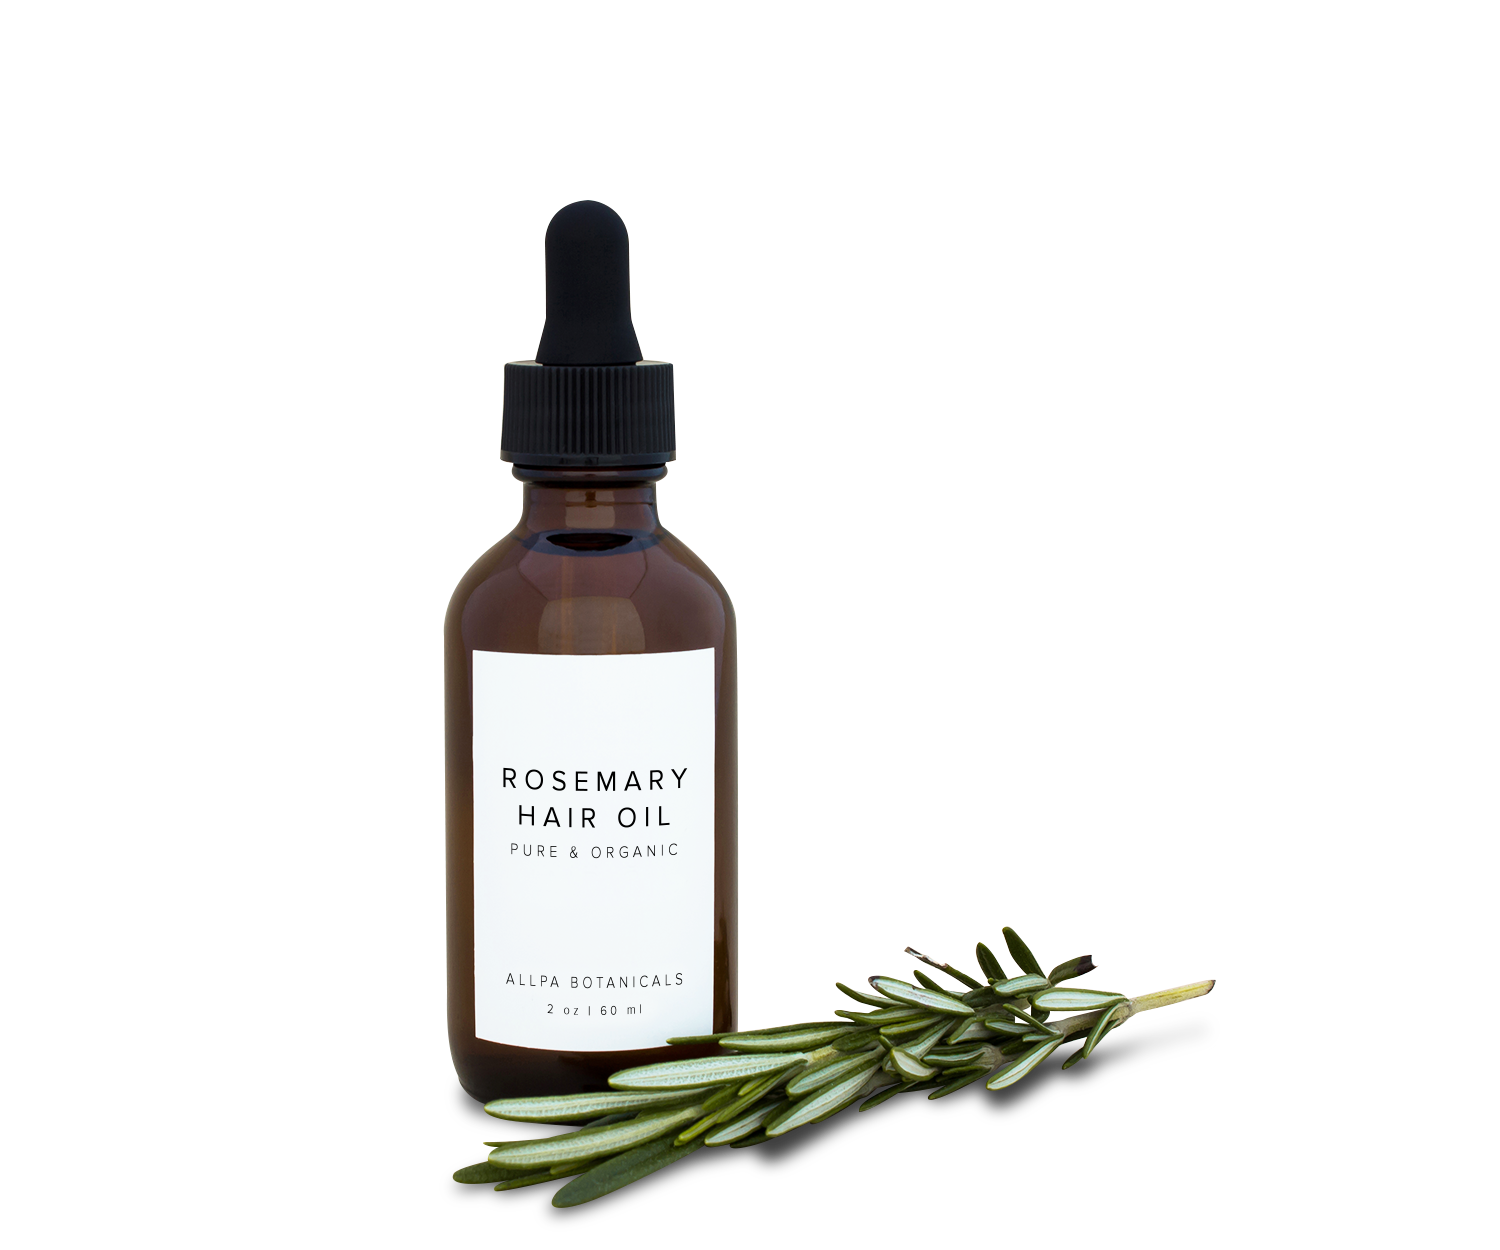 Rosemary Oil by Allpa Botanicals